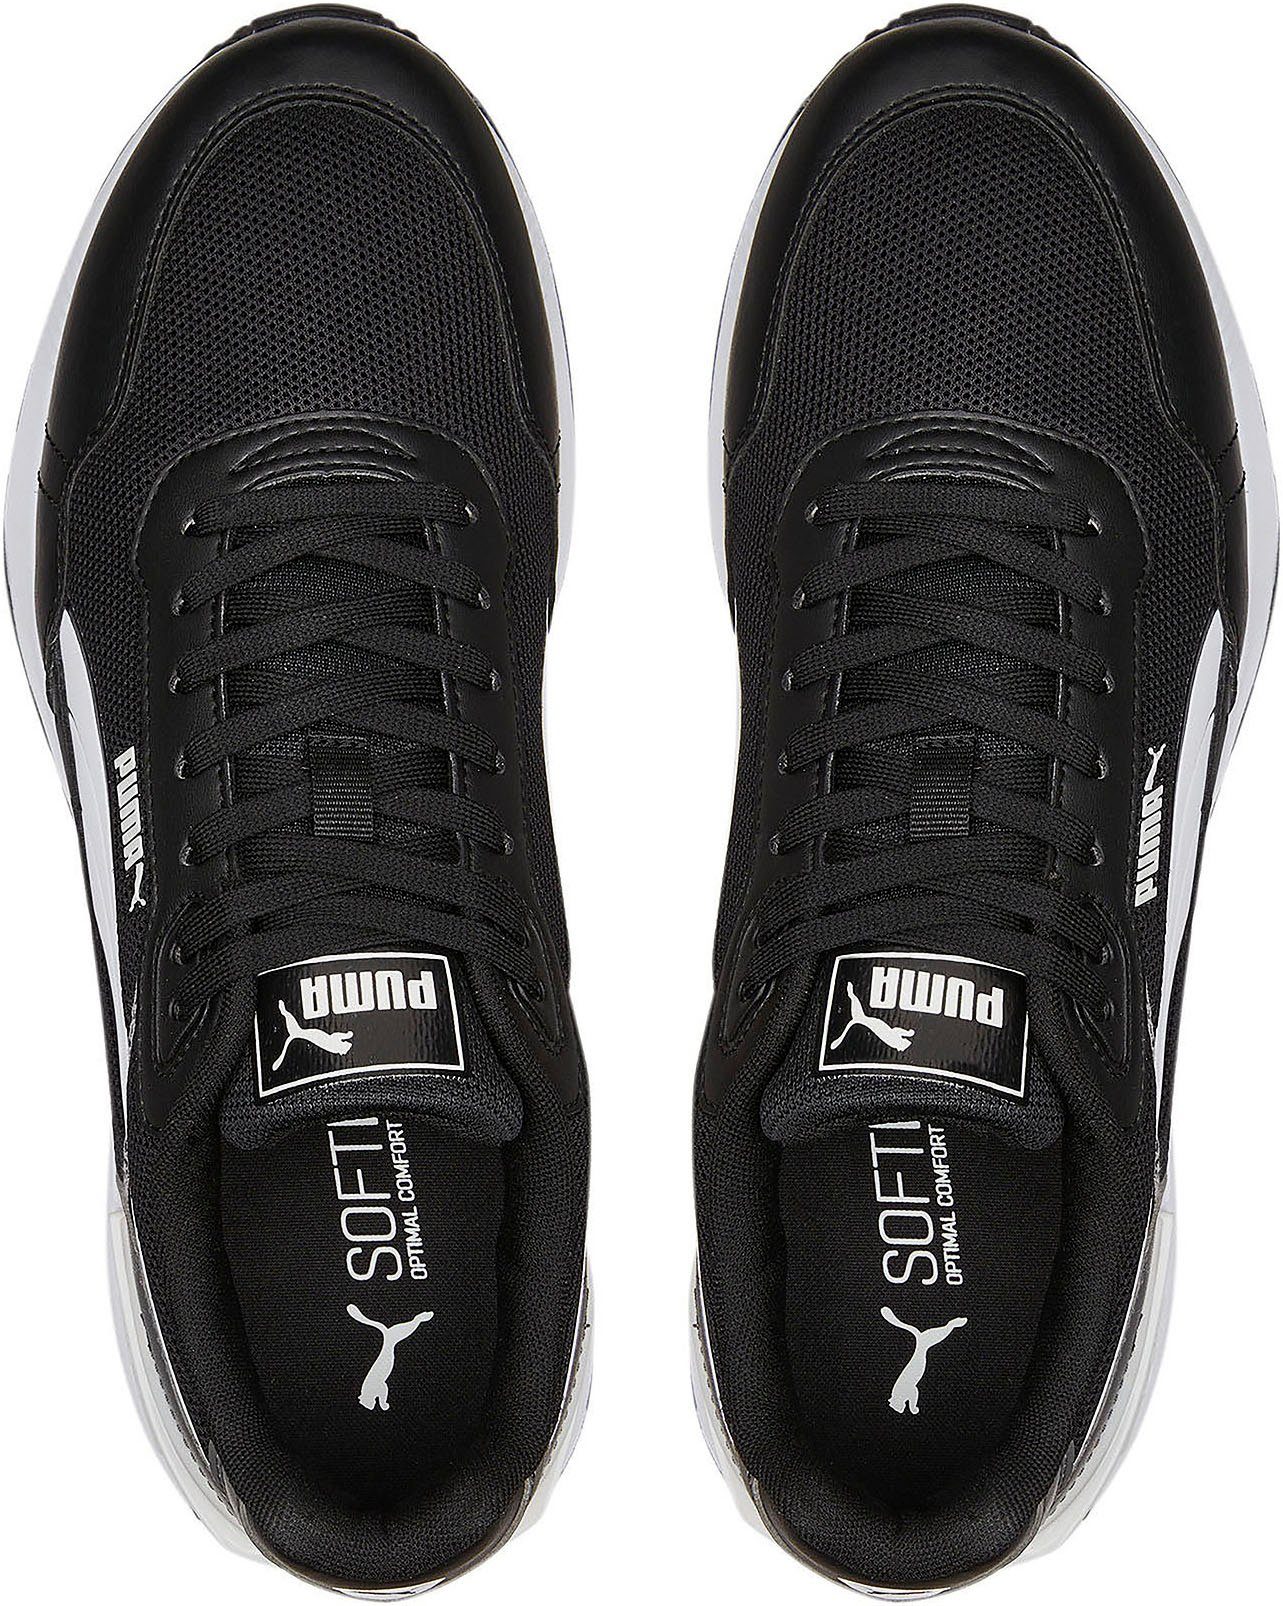 Sneaker PUMA Graviton Mega schwarz-weiß